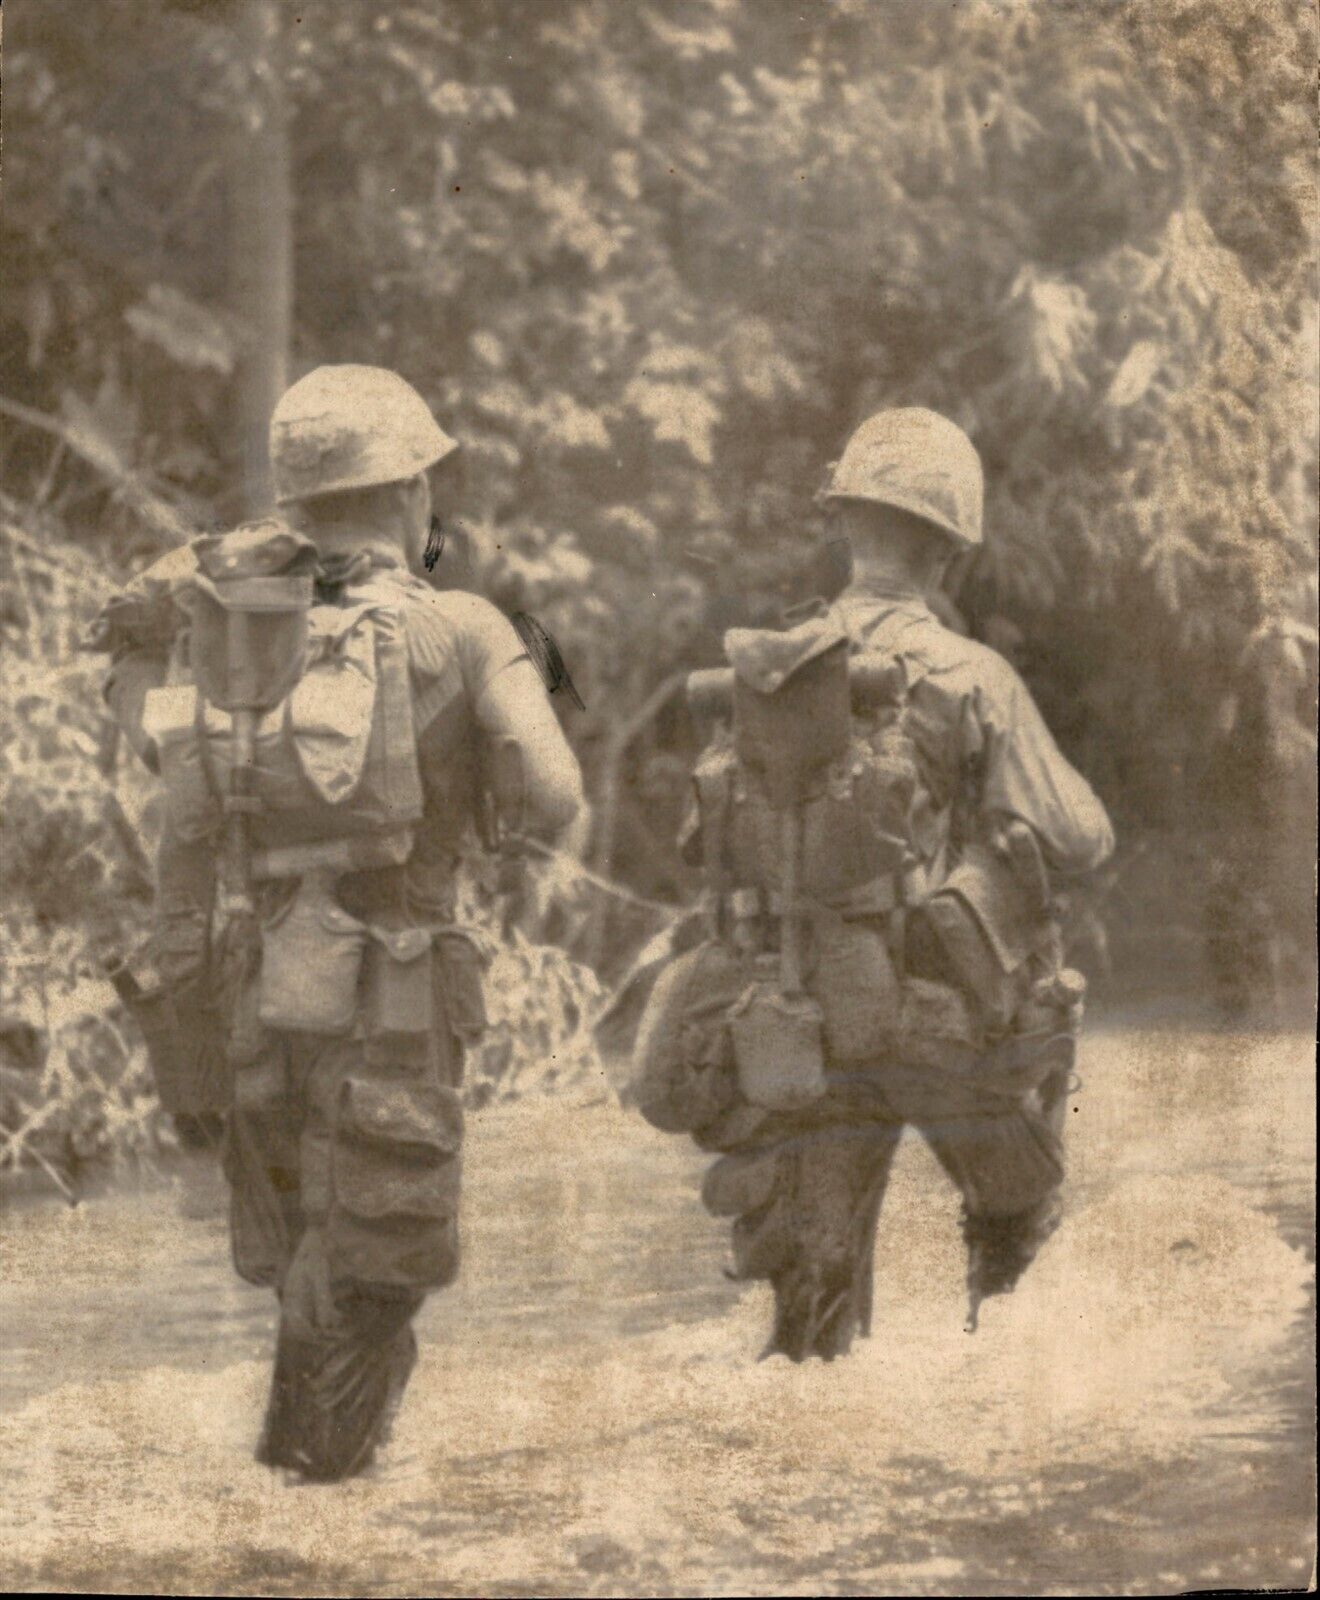 LD292 Wire Photo US MARINES WADING CAUTIOUSLY IN SHALLOW STREAM DA NANG VIETNAM